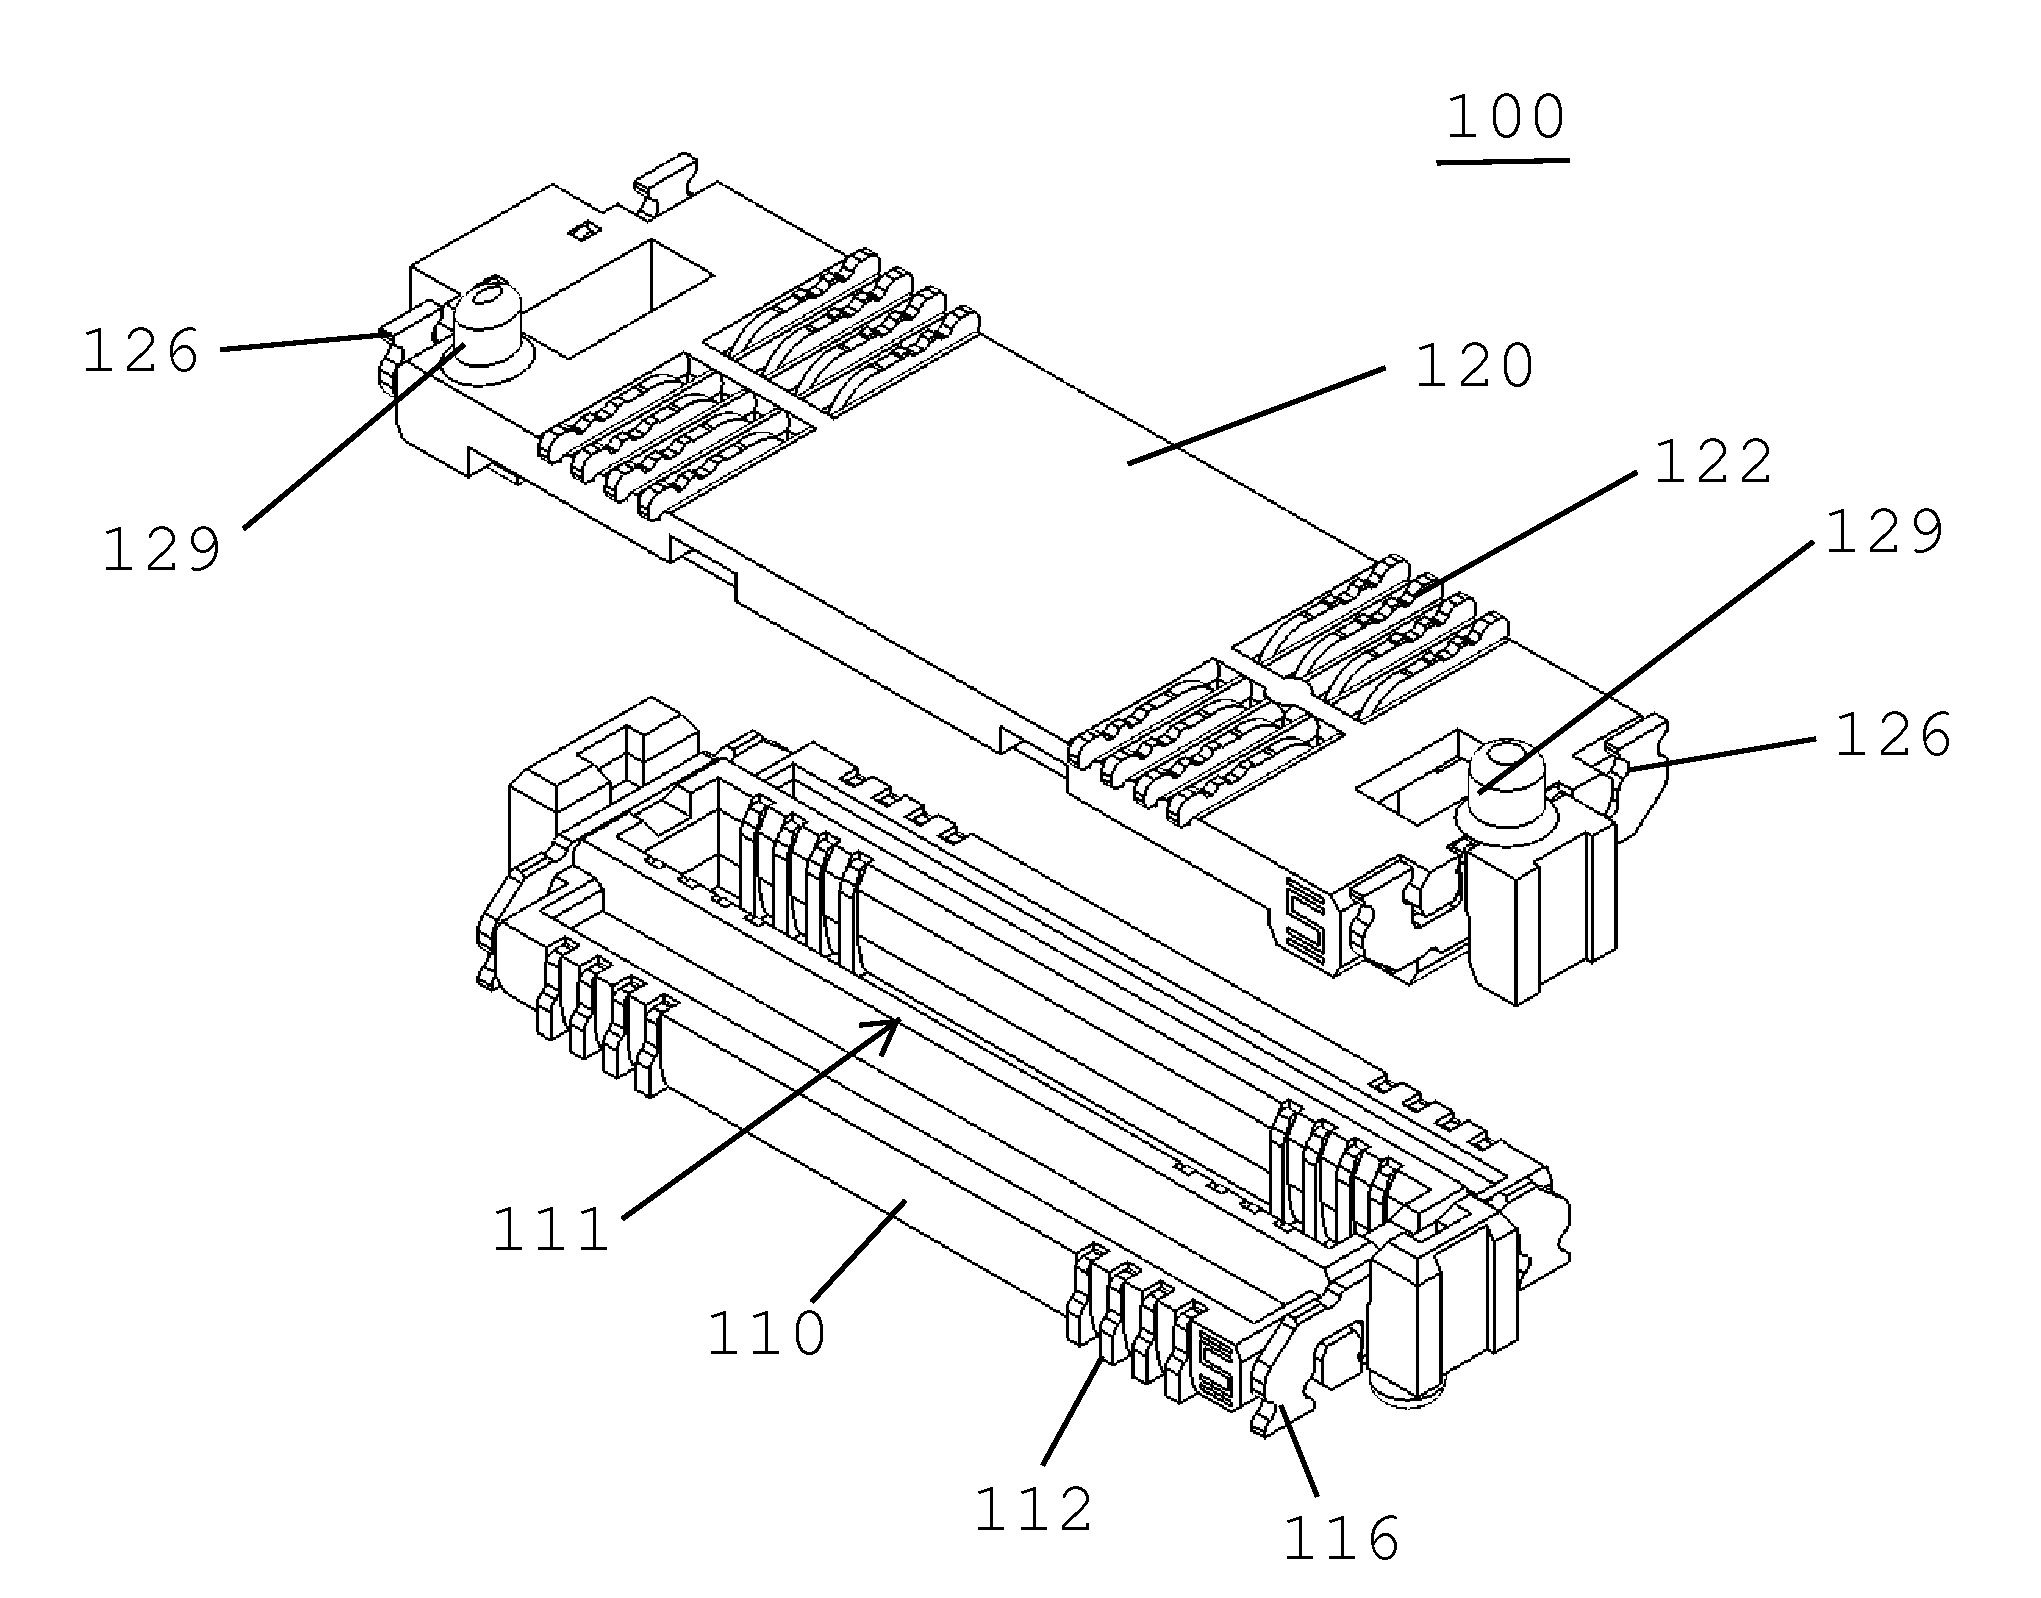 Low-profile mezzanine connector